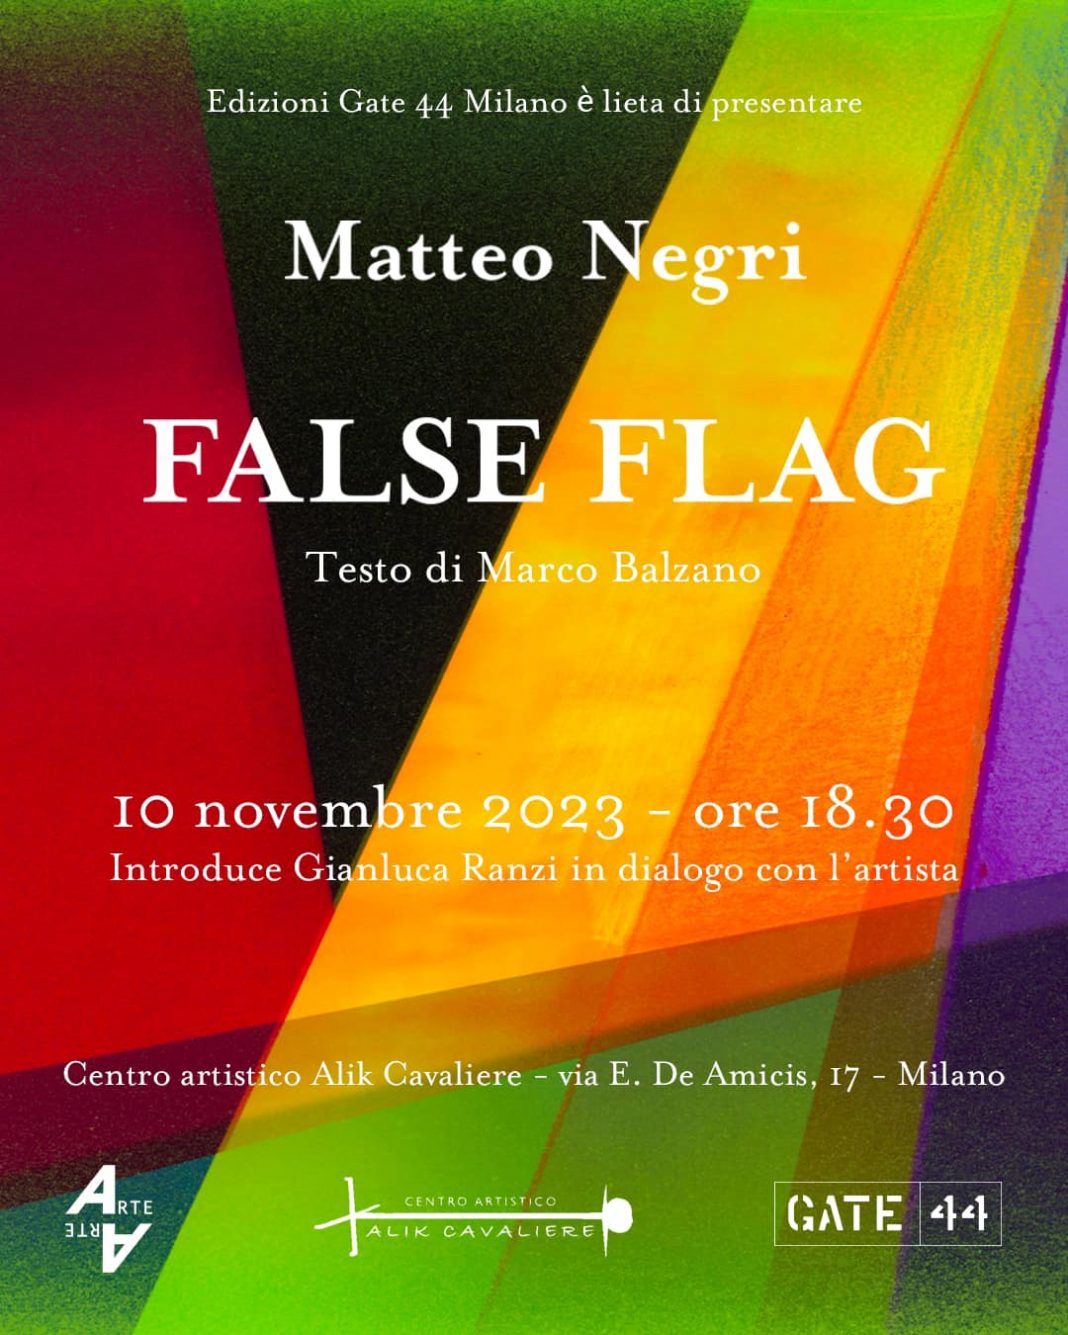 Matteo Negri – FALSE FLAGhttps://www.exibart.com/repository/media/formidable/11/img/da8/Negri-1068x1335.jpg